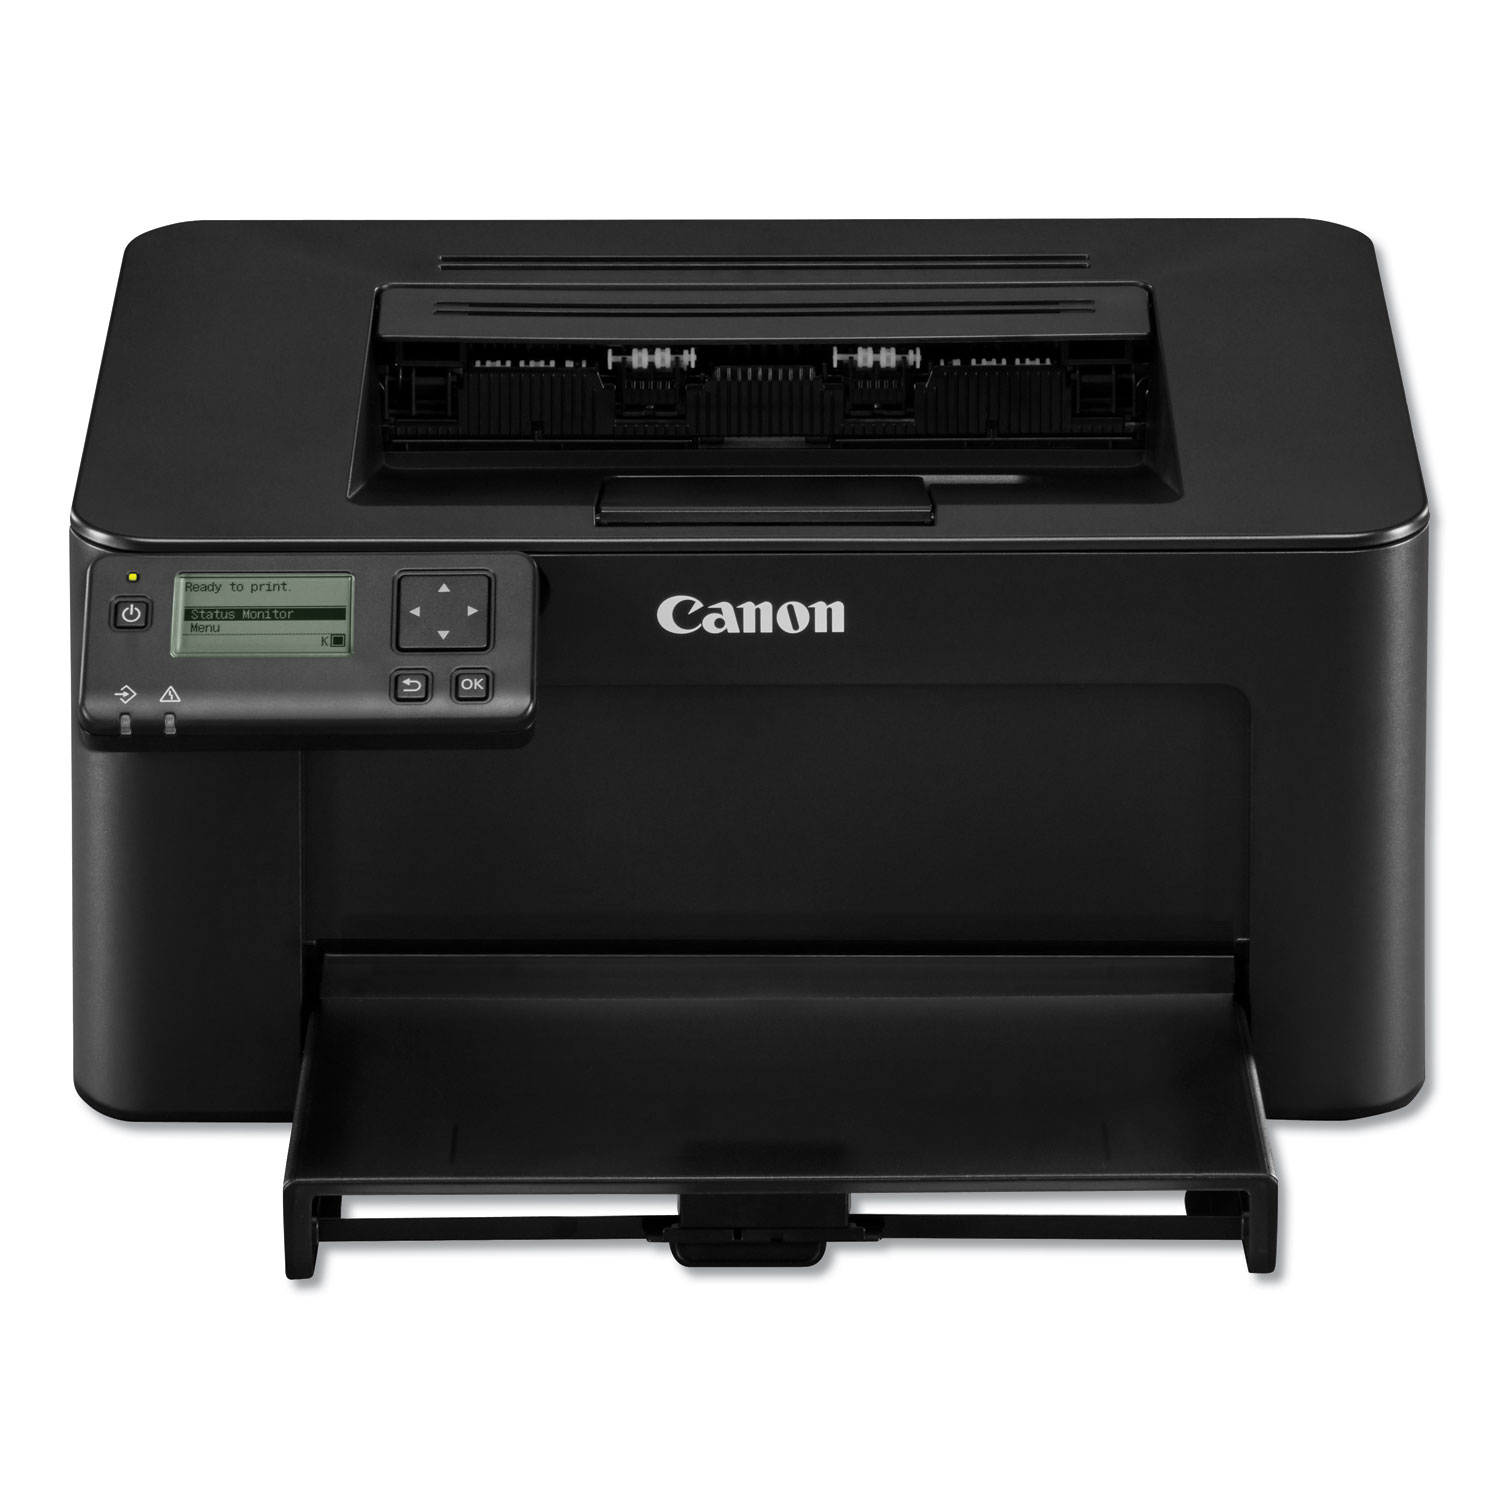  Canon 2207C004 imageCLASS LBP113w Wireless Laser Printer (CNM2207C004) 